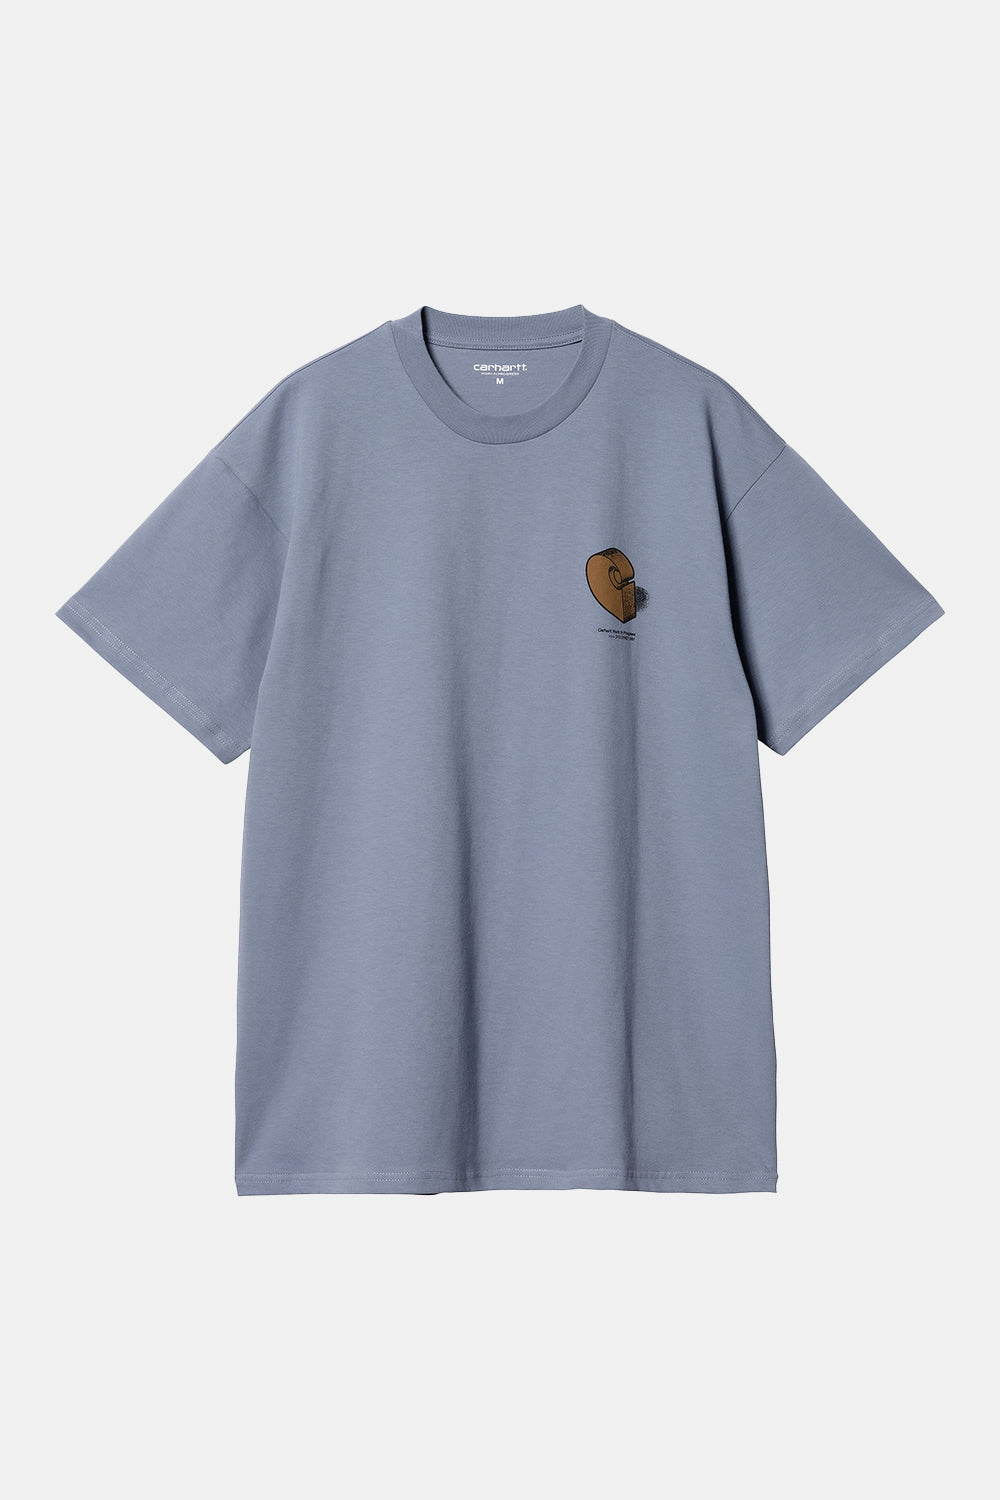 Carhartt WIP Short Sleeve Diagram C T-Shirt (Bay Blue)
